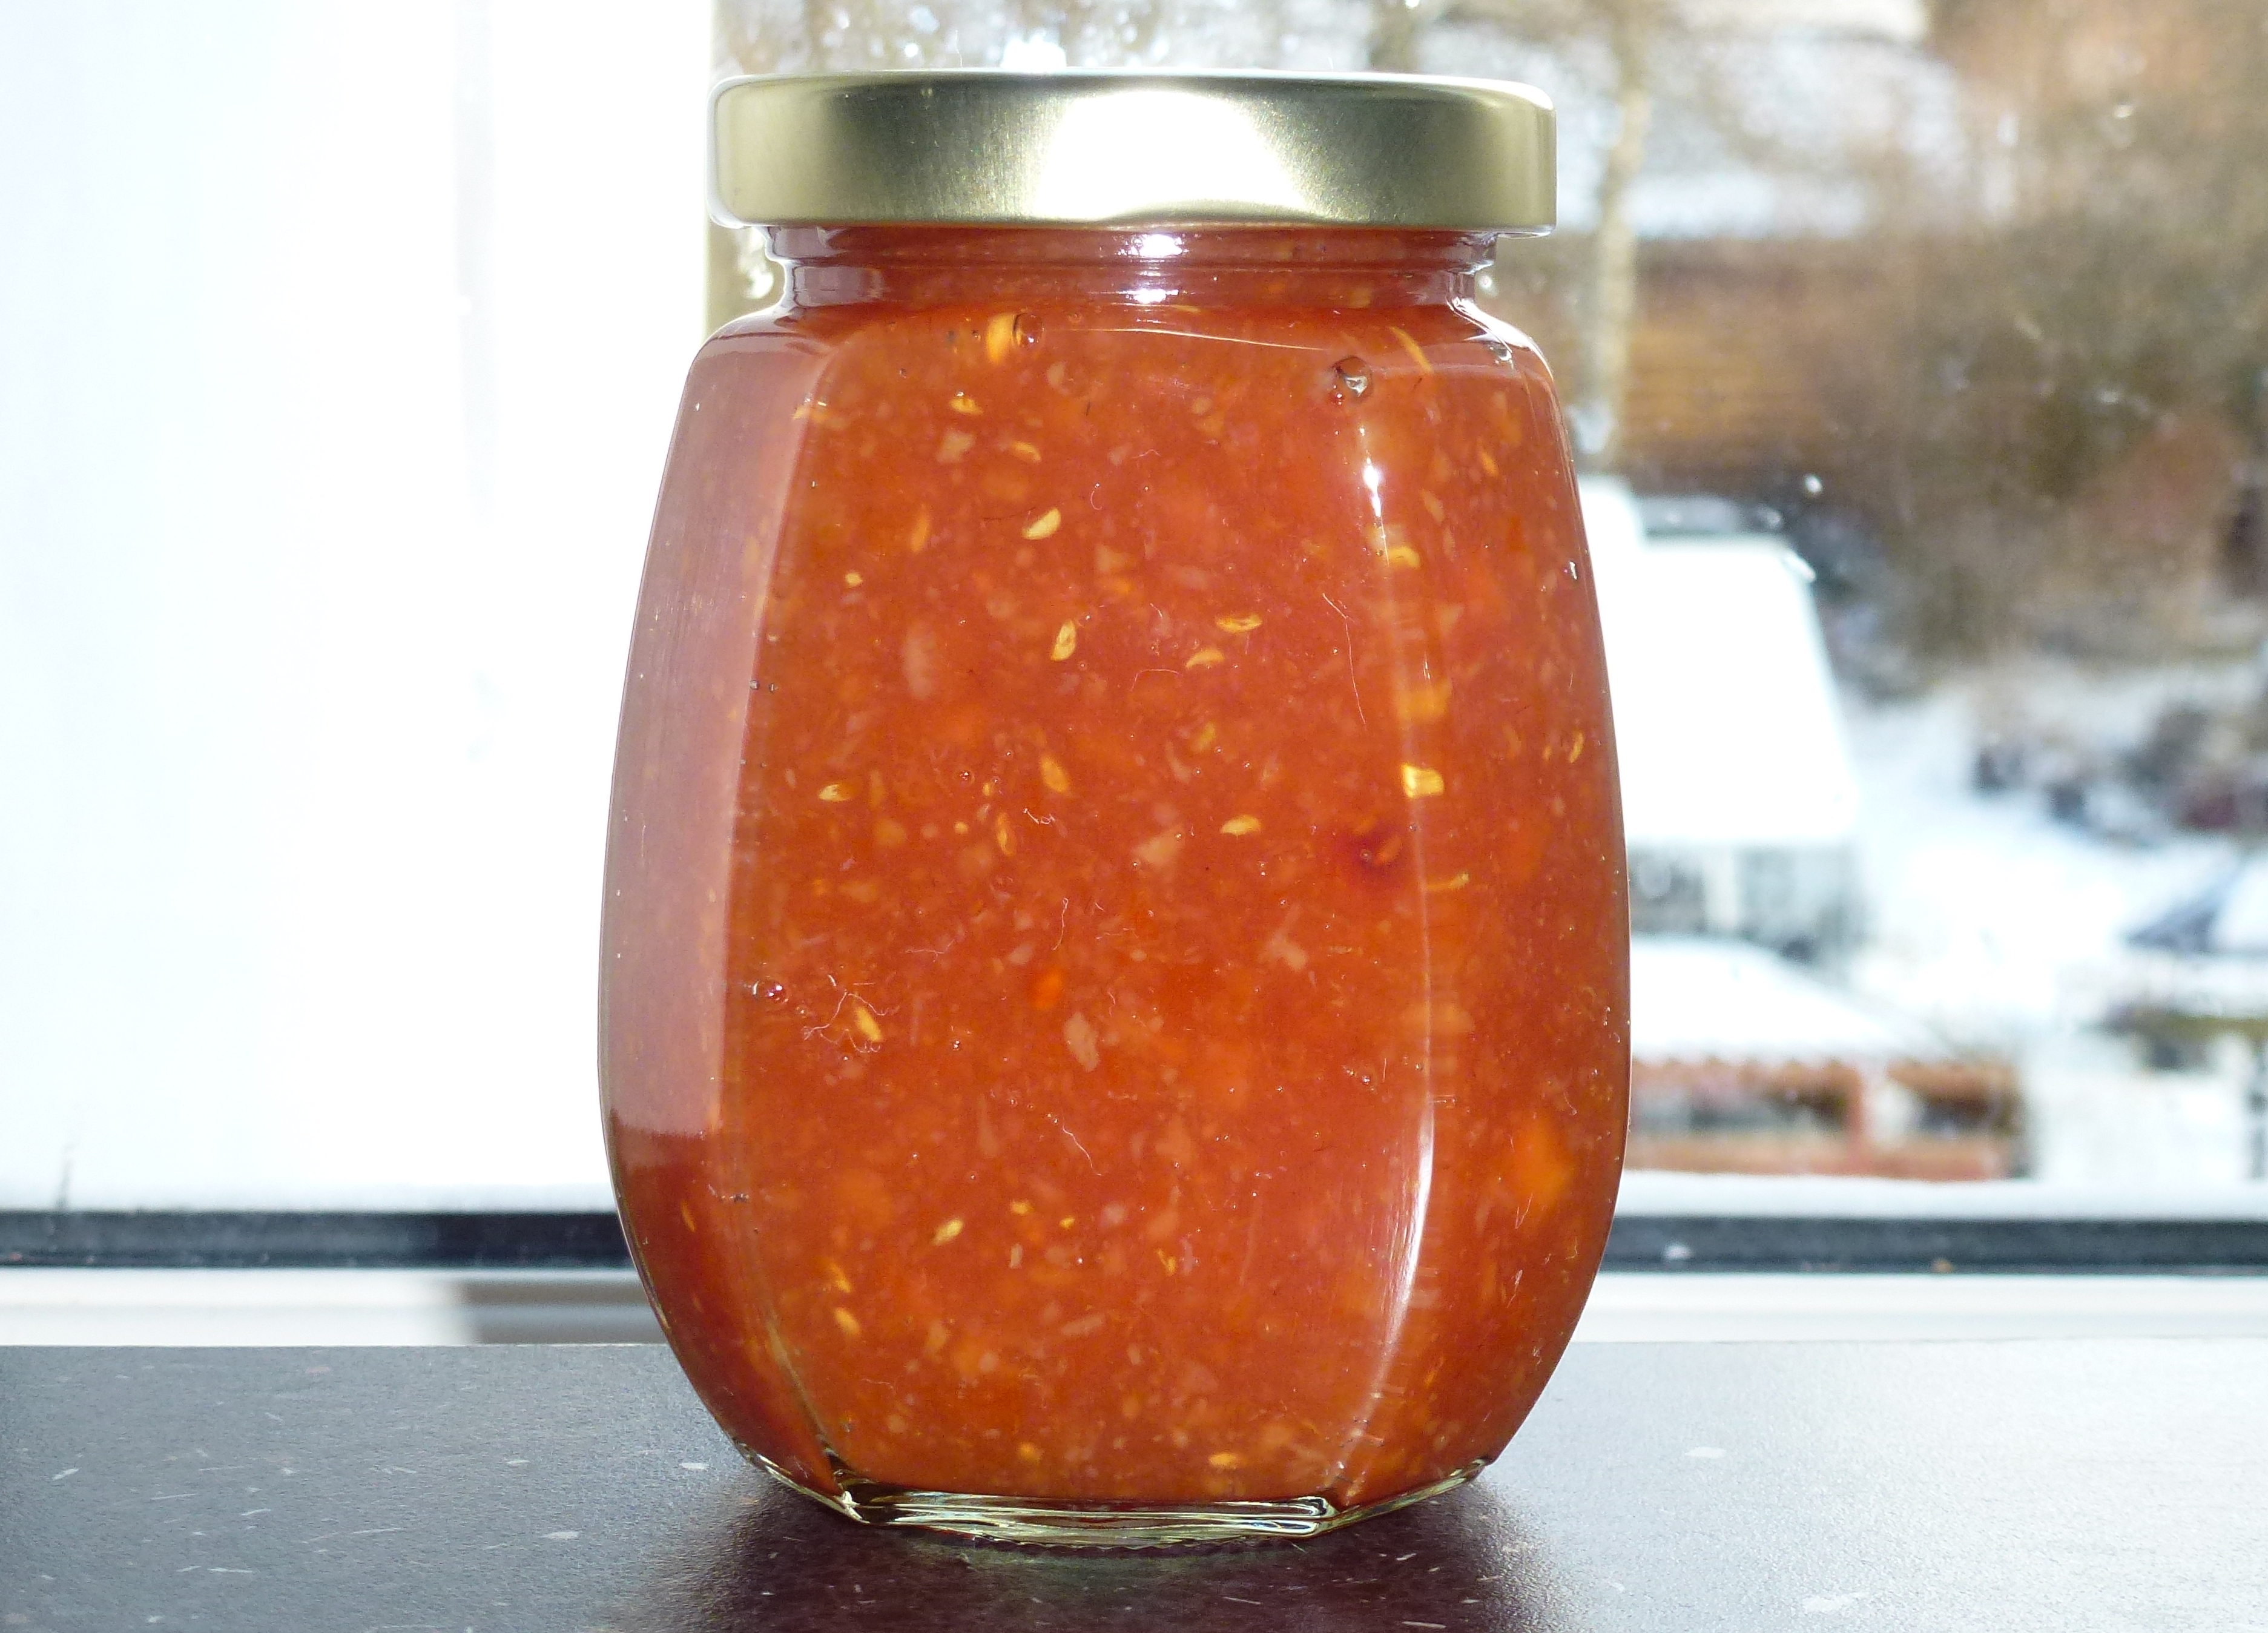 Filurlig chili marmelade med appelsin og hindbær | Vivis chili